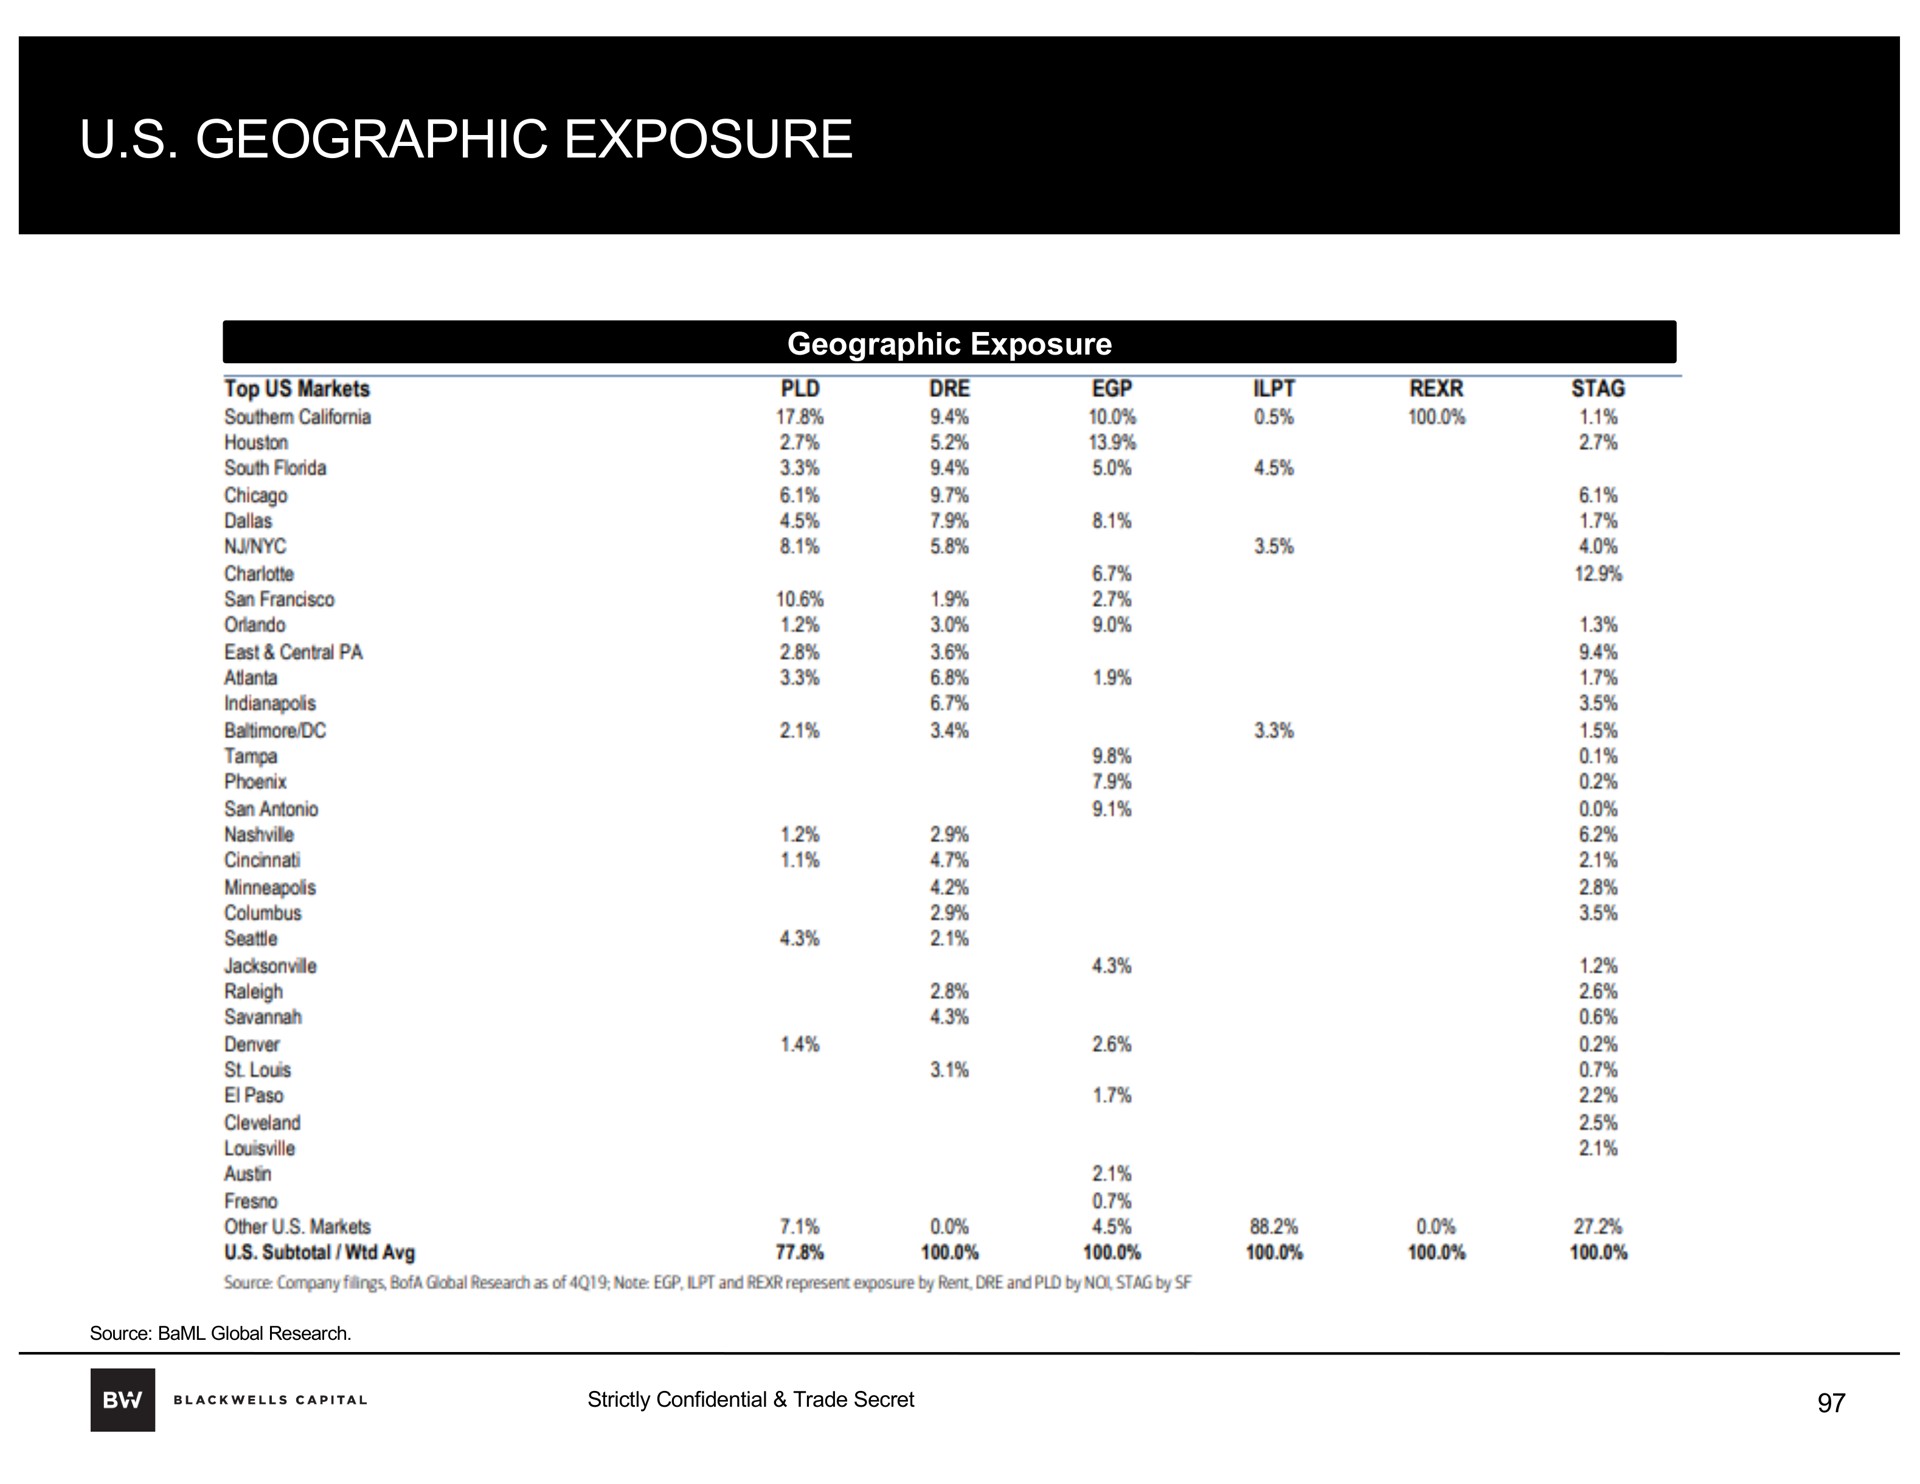 geographic exposure | Blackwells Capital